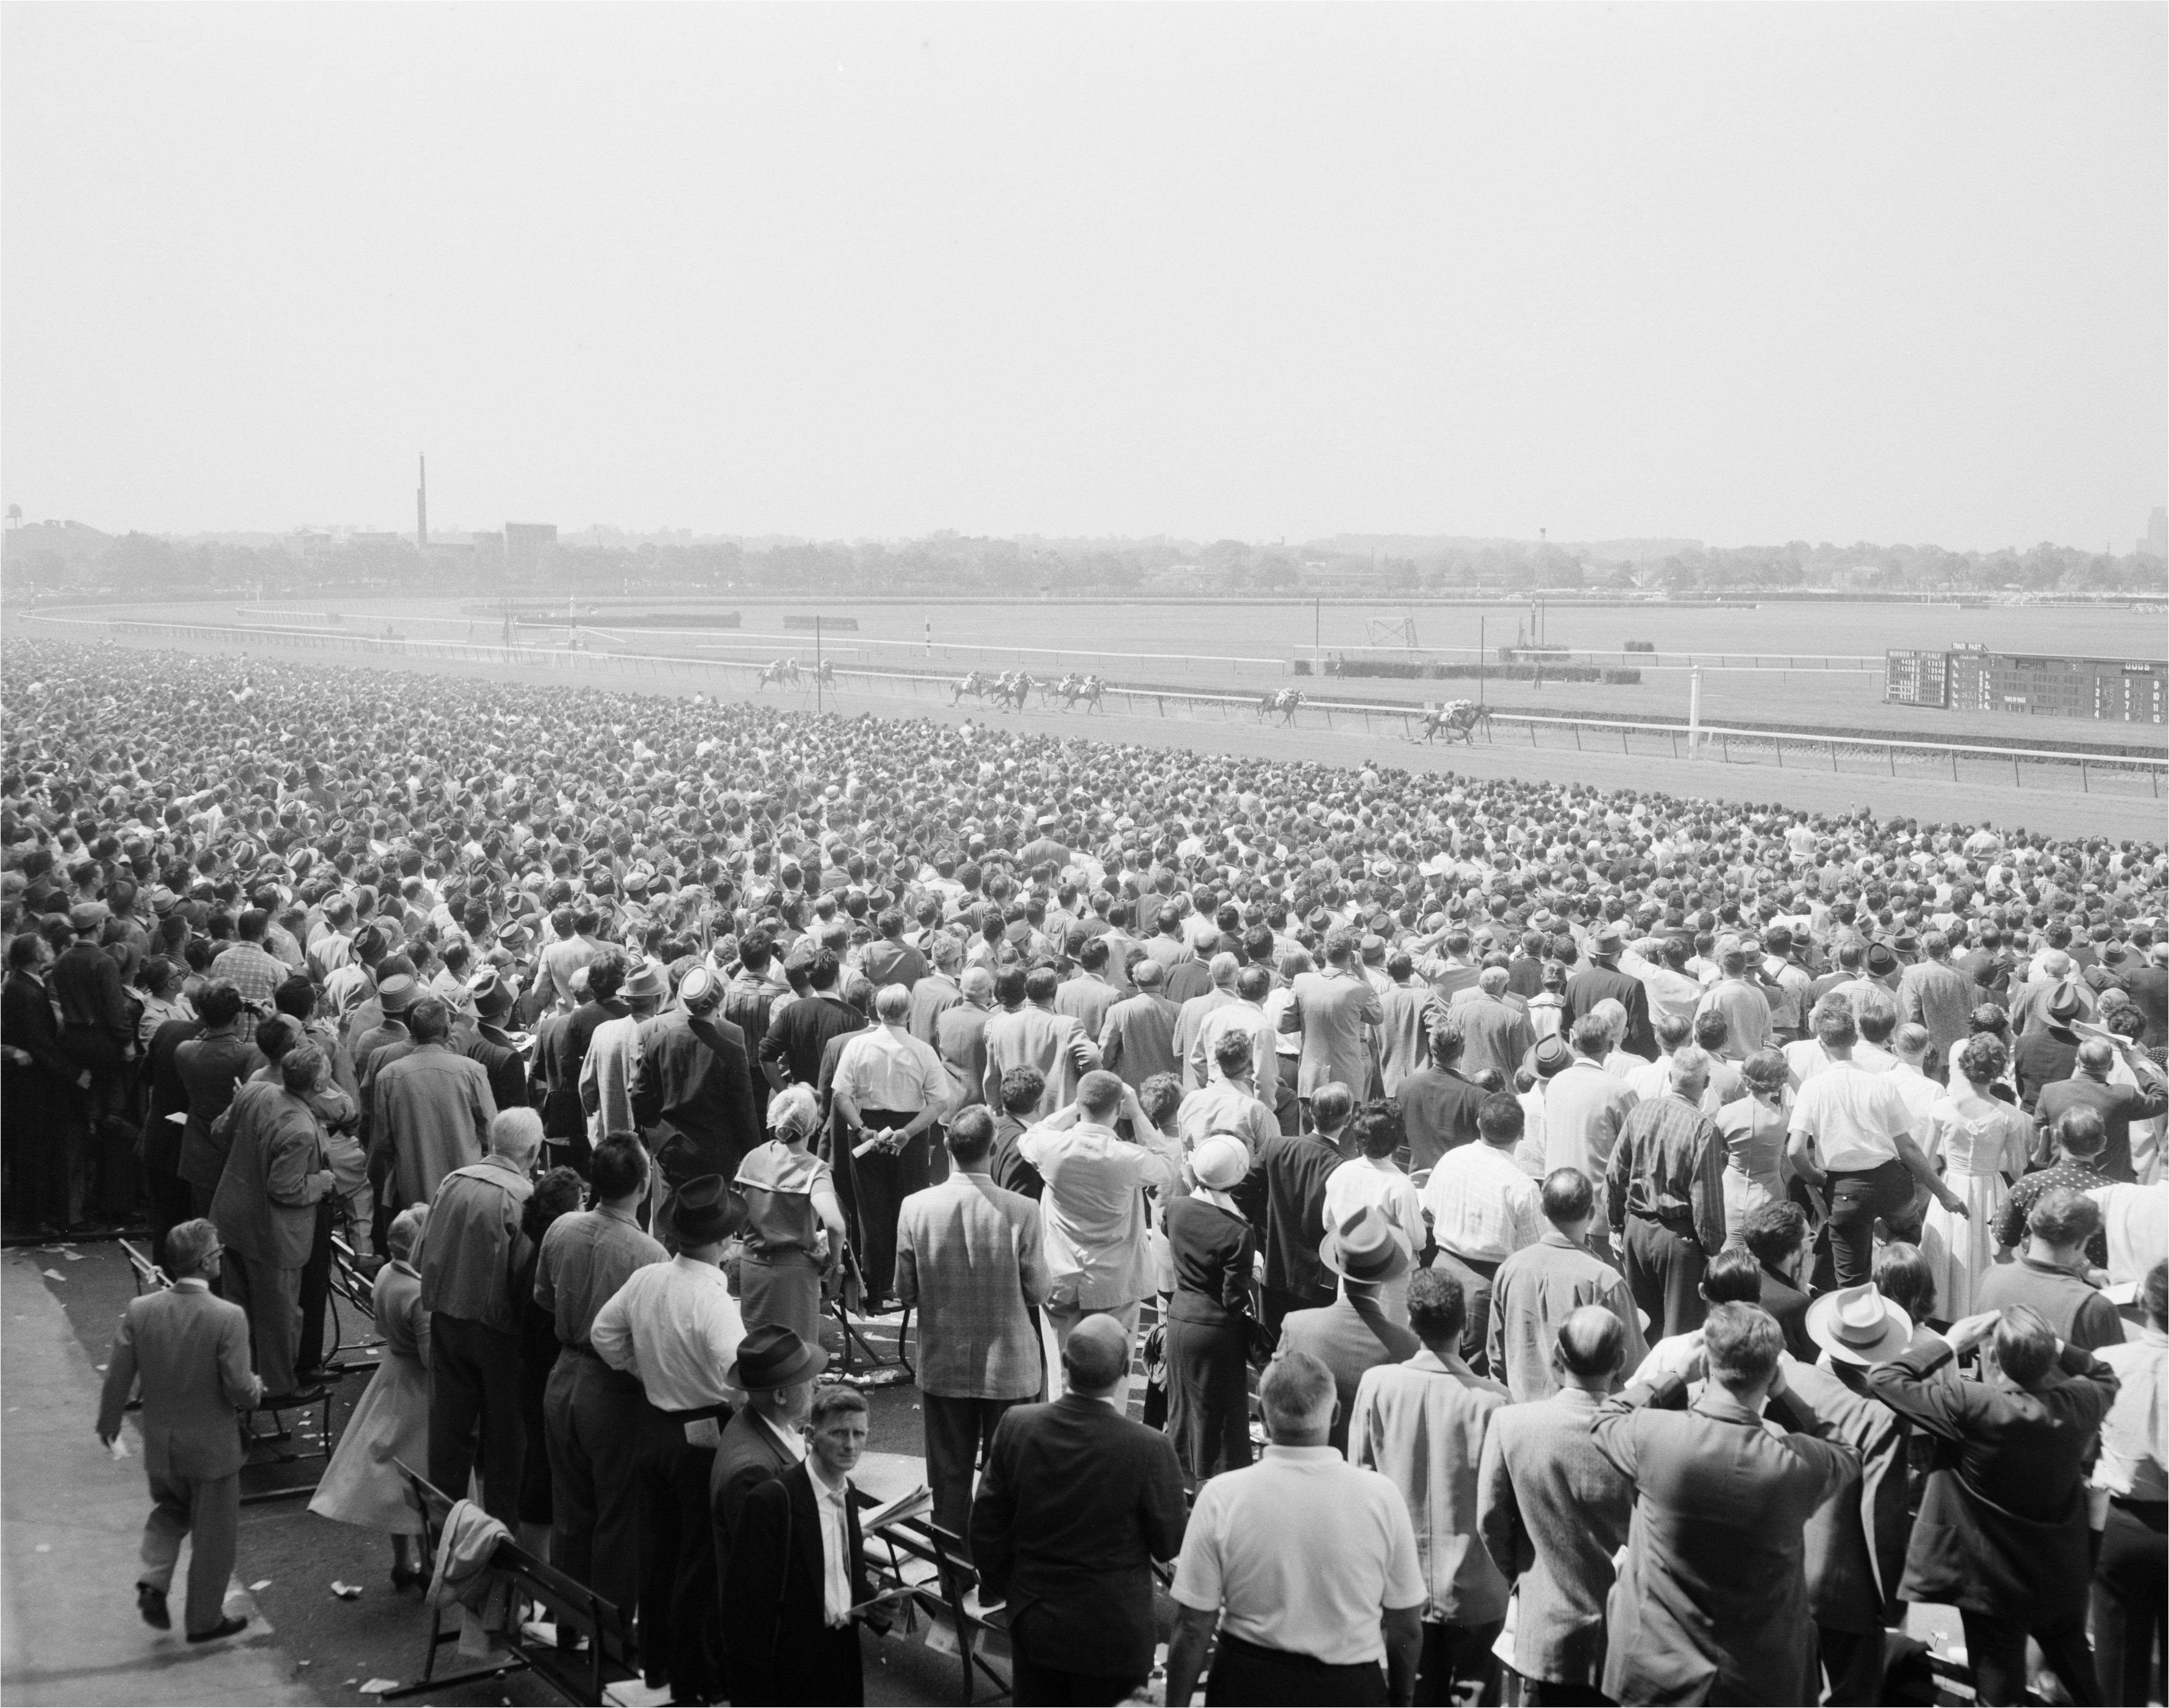 usa new york state elmont spectators at belmont race track 1958 114225635 598b38b9845b34001134e69f jpg